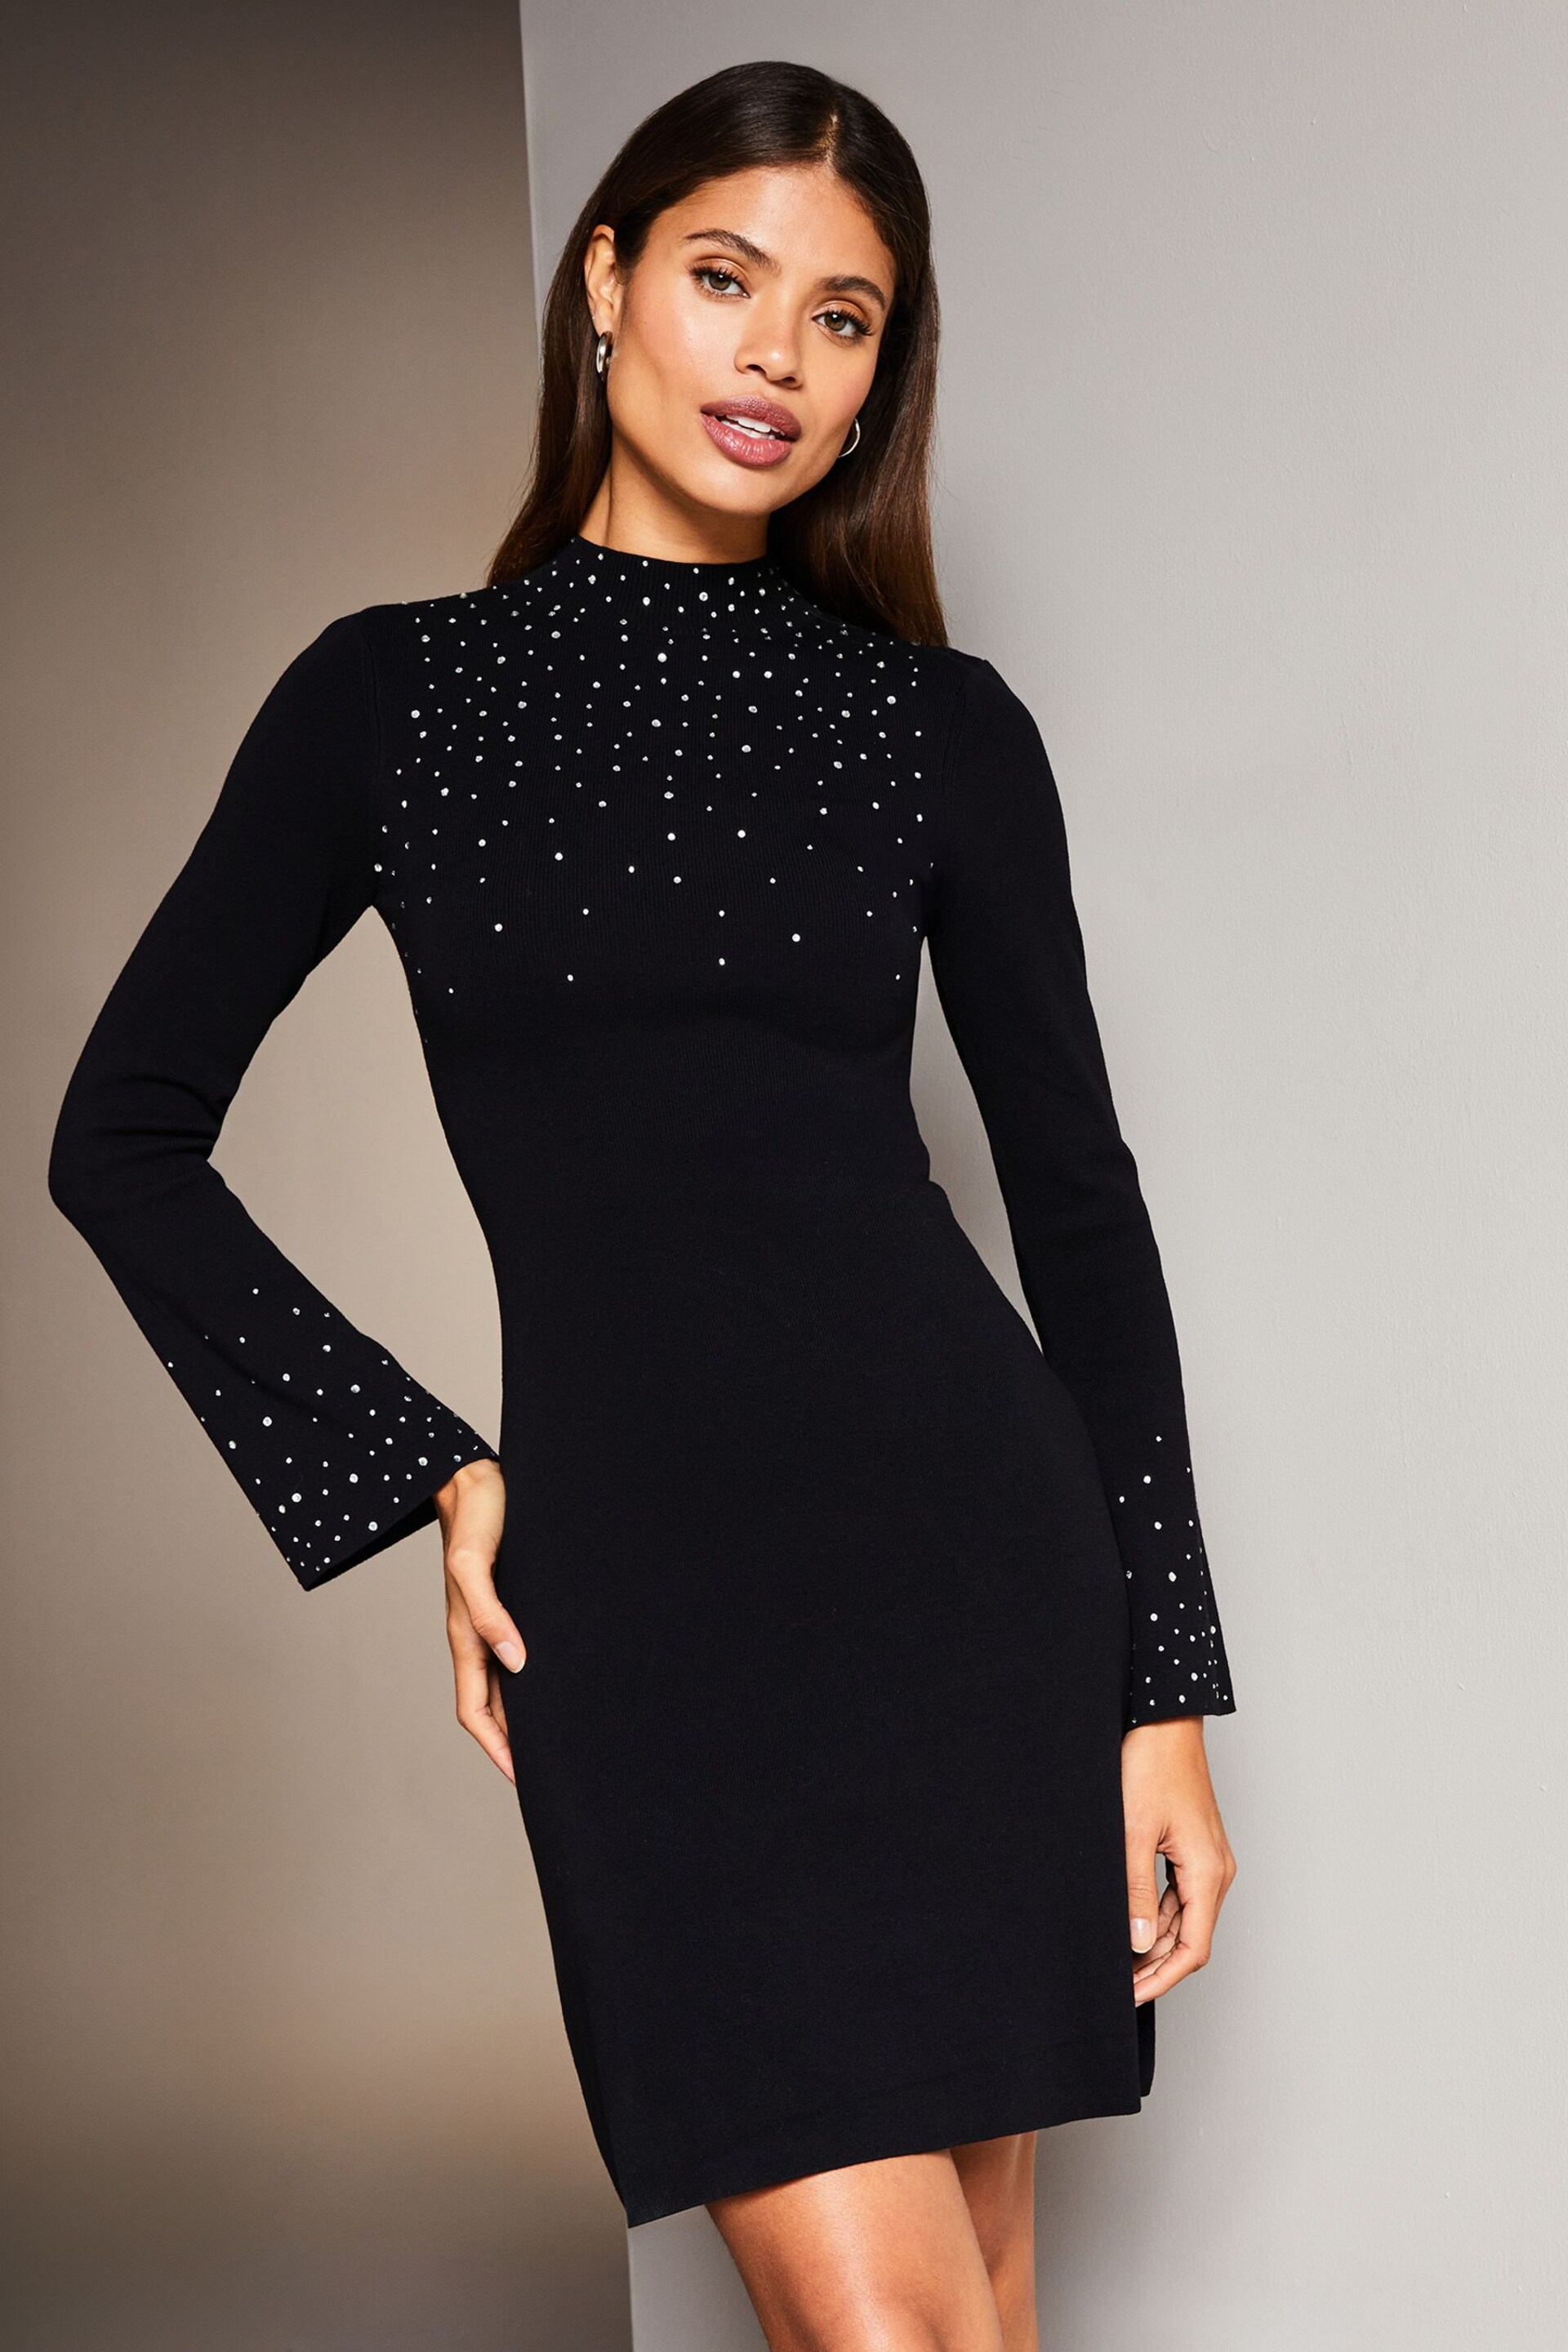 Lipsy Black Curve Long Sleeve Glitter High Neck Knitted Jumper Dress - Image 1 of 4